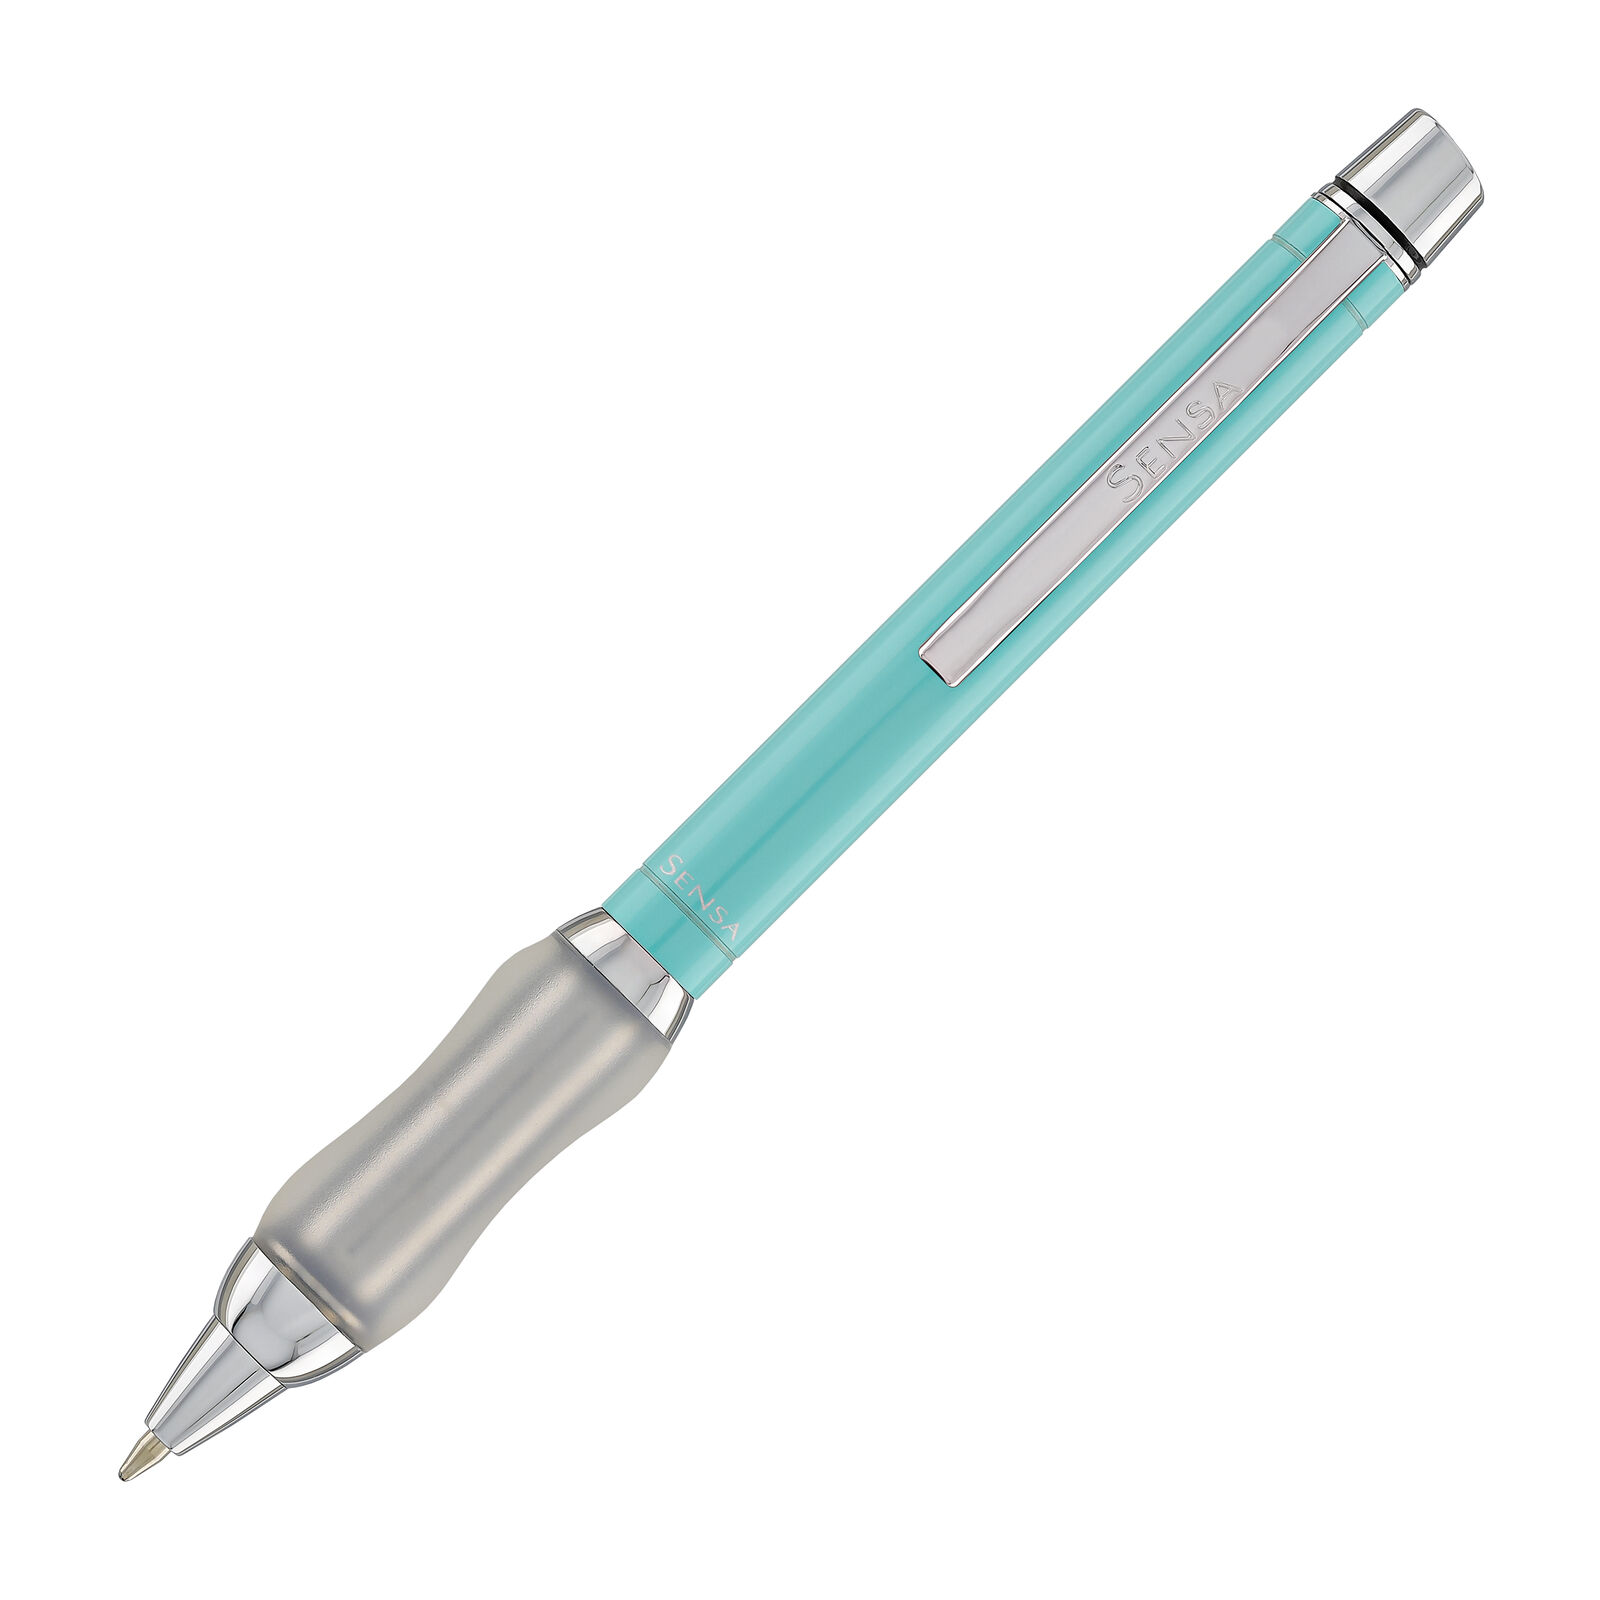 Sensa Metro Ballpoint Pen in Steel Turquoise Sea - NEW in Original Box